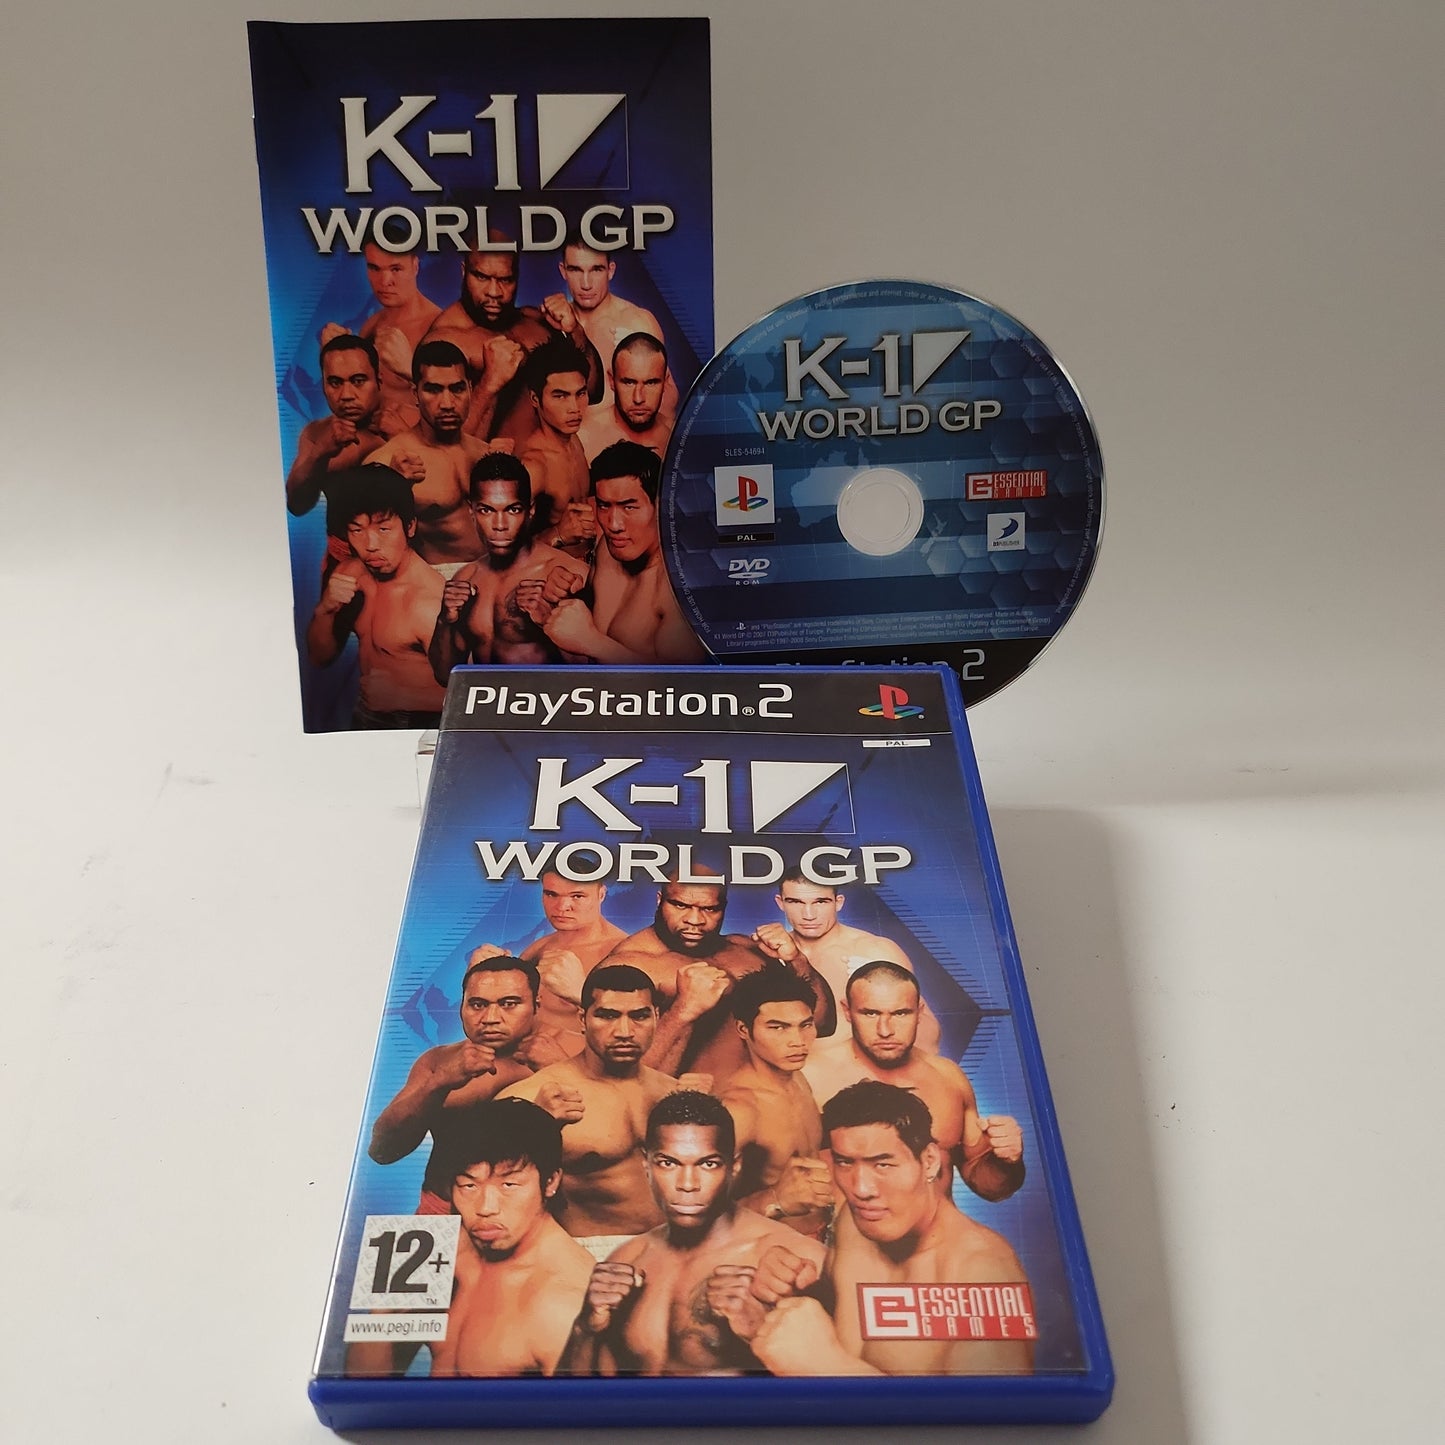 K-1 World GP Playstation 2